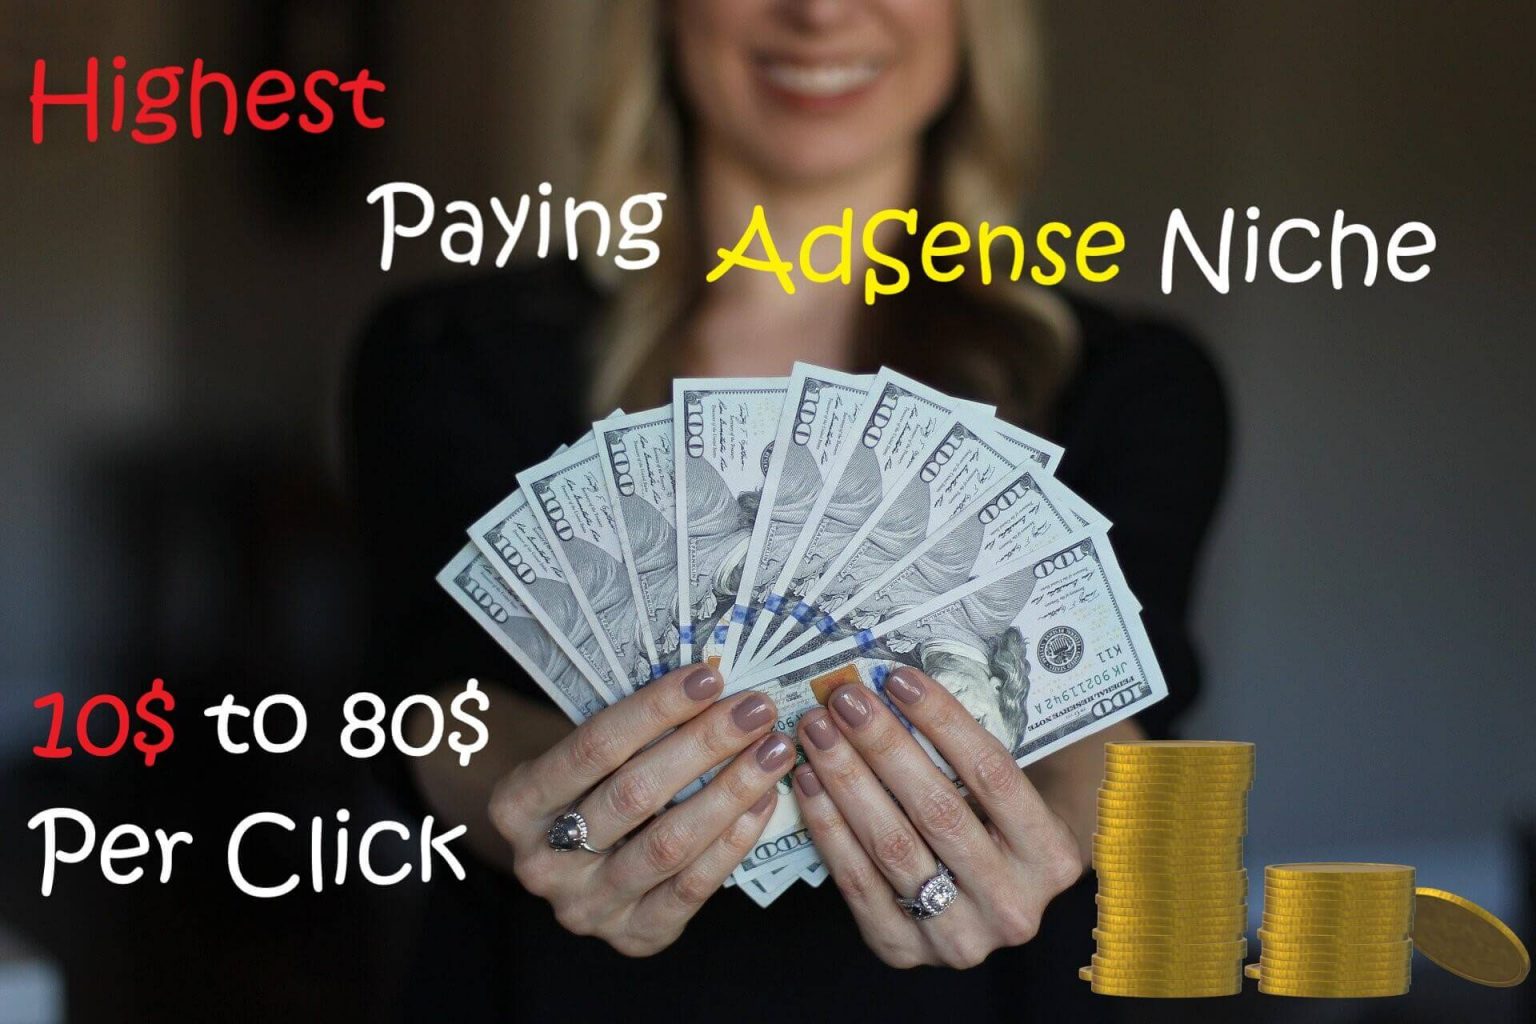 Best Highest Paying AdSense Niche & High CPC Keywords